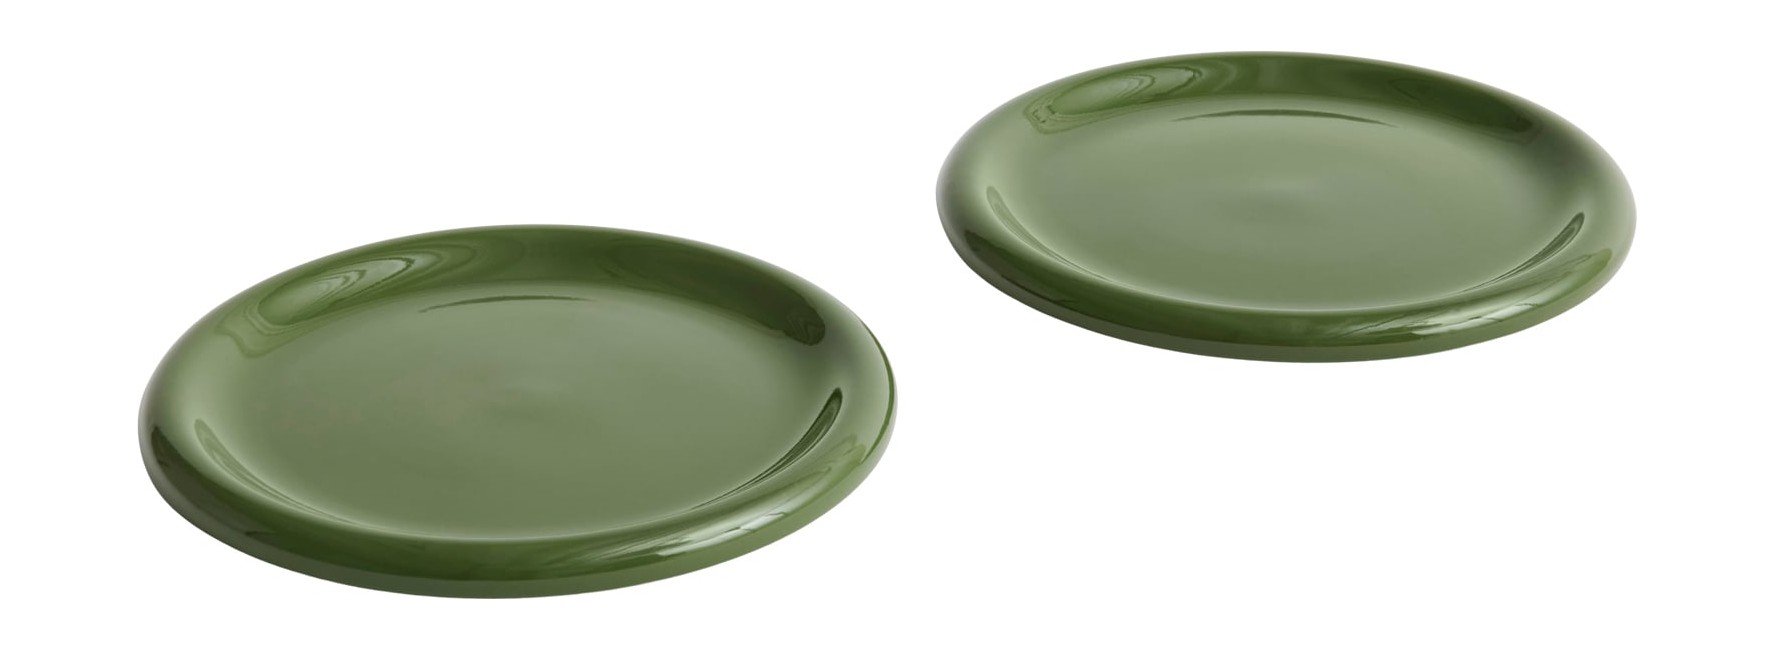 HAY - Barro Plate Ø24, set of 2 - Green